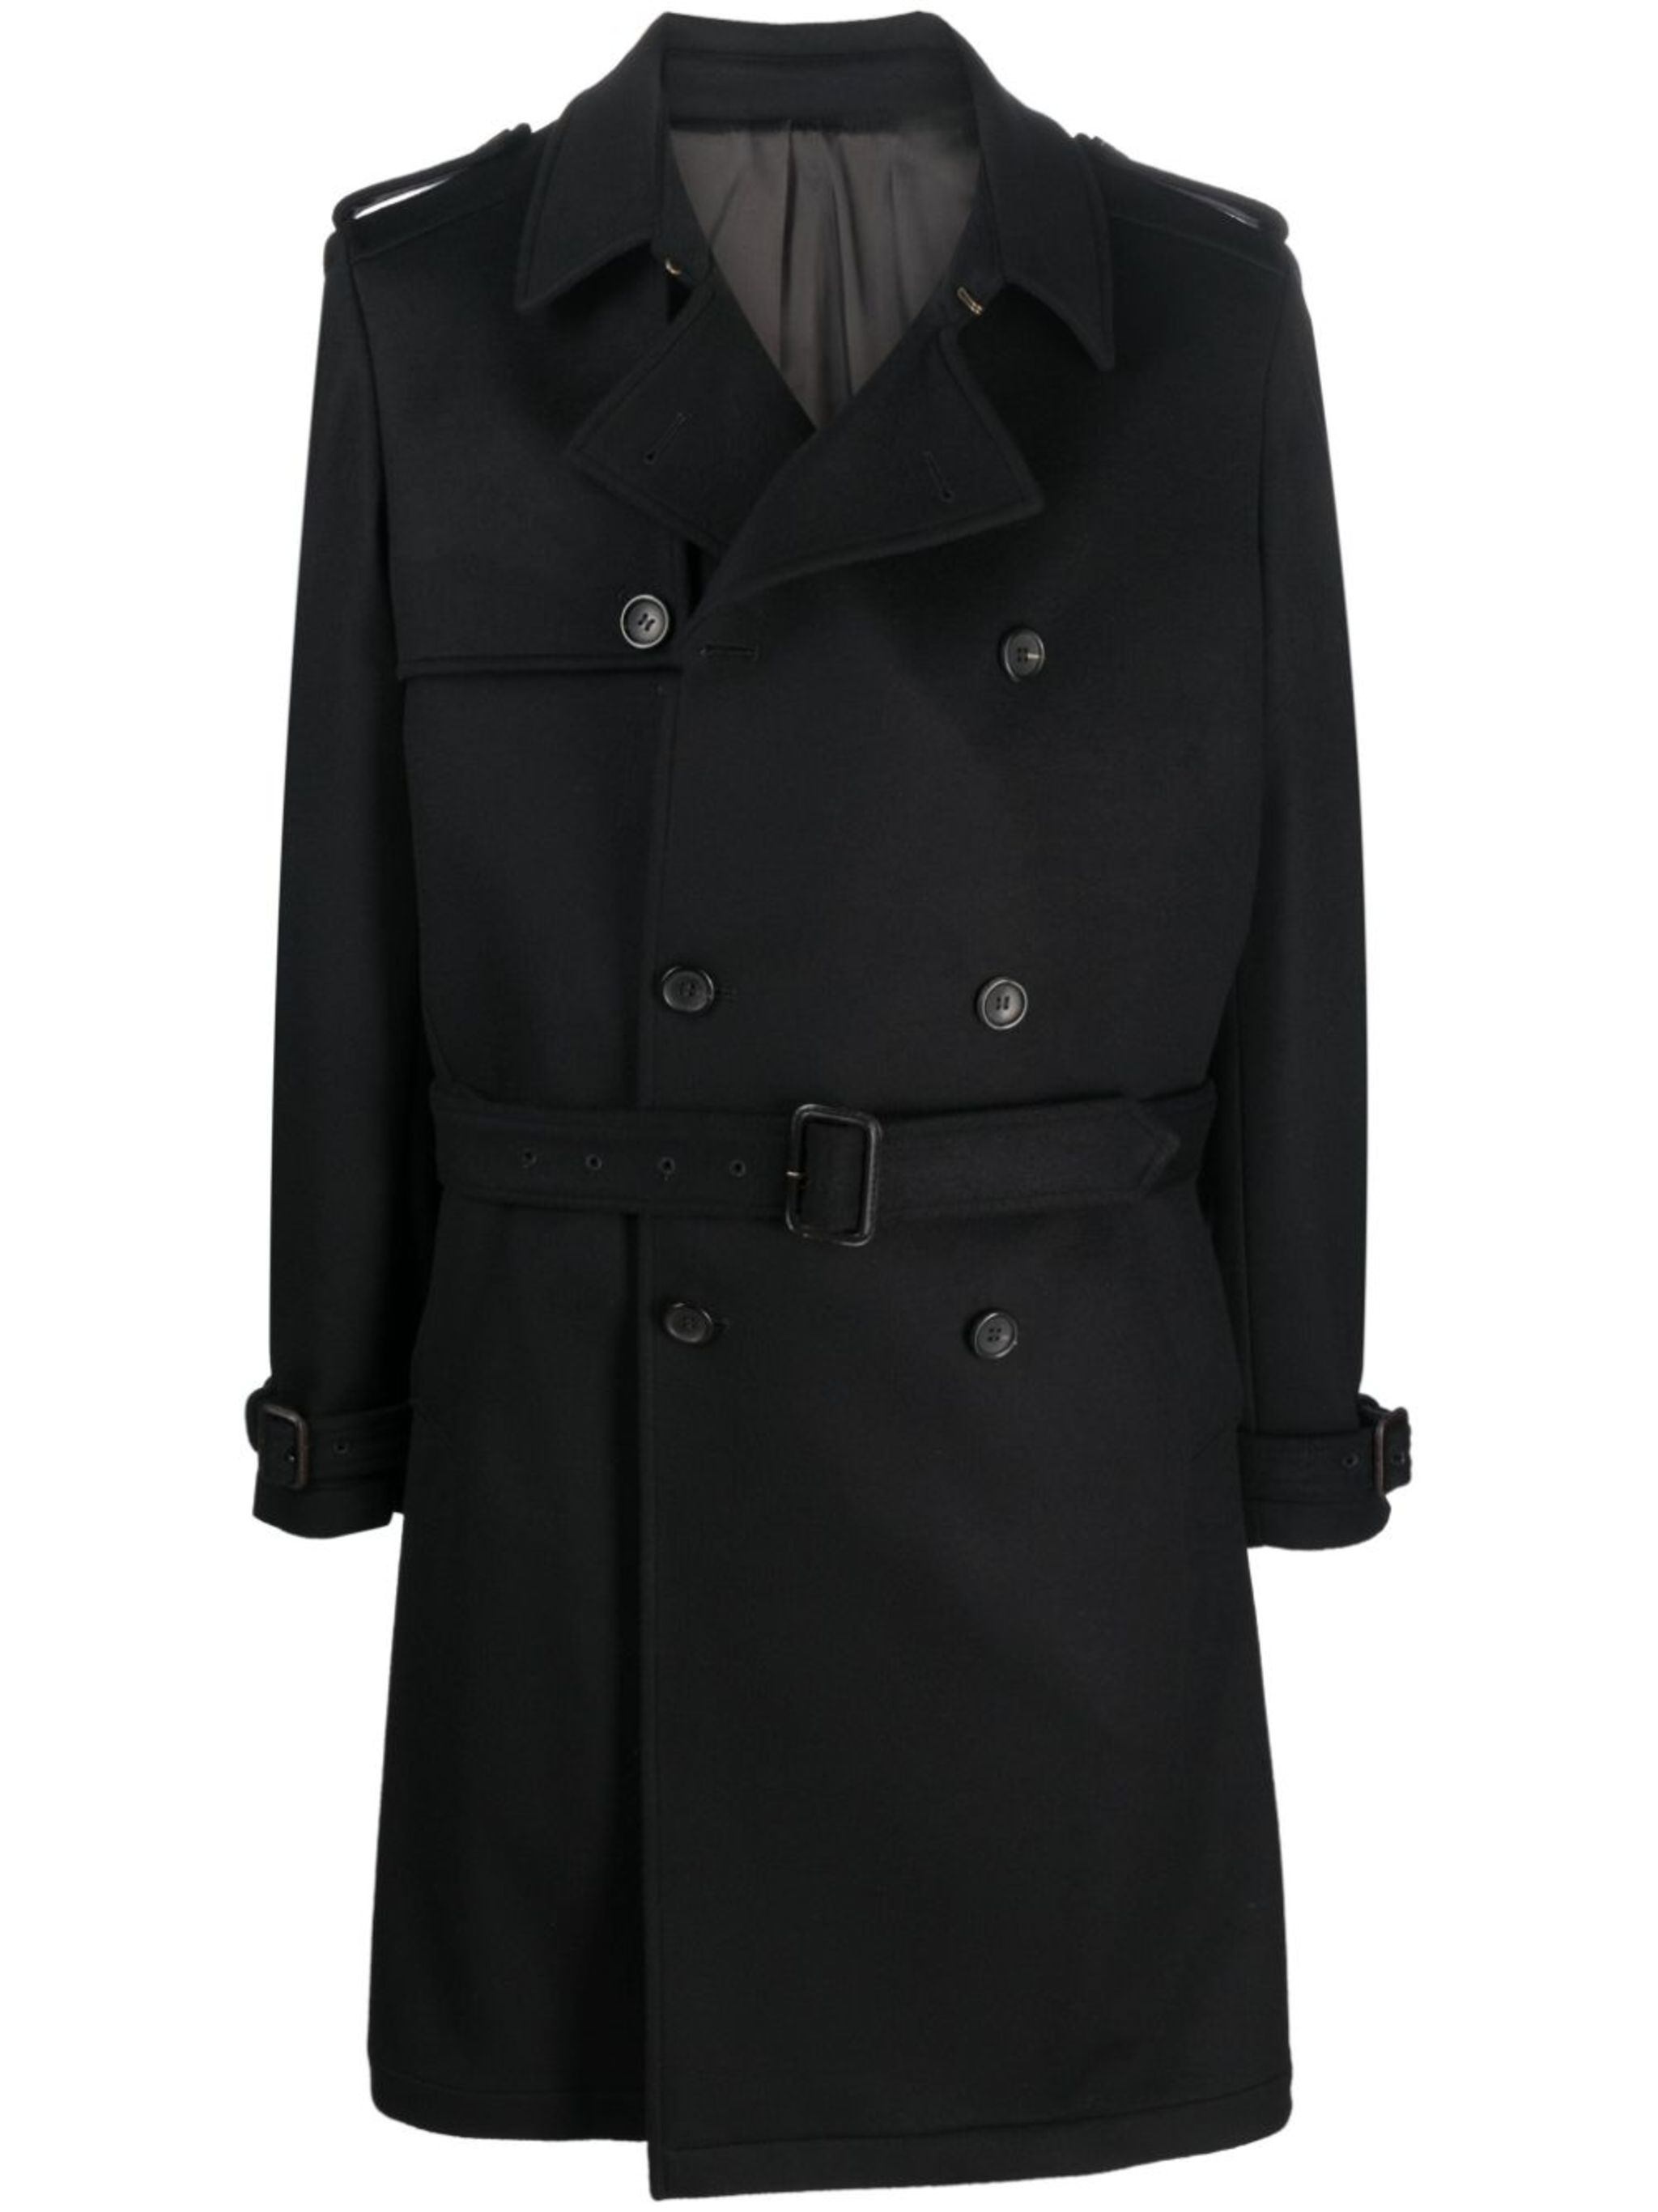 belted-waist virgin-wool trench coat | ERALDO | Eraldo.com